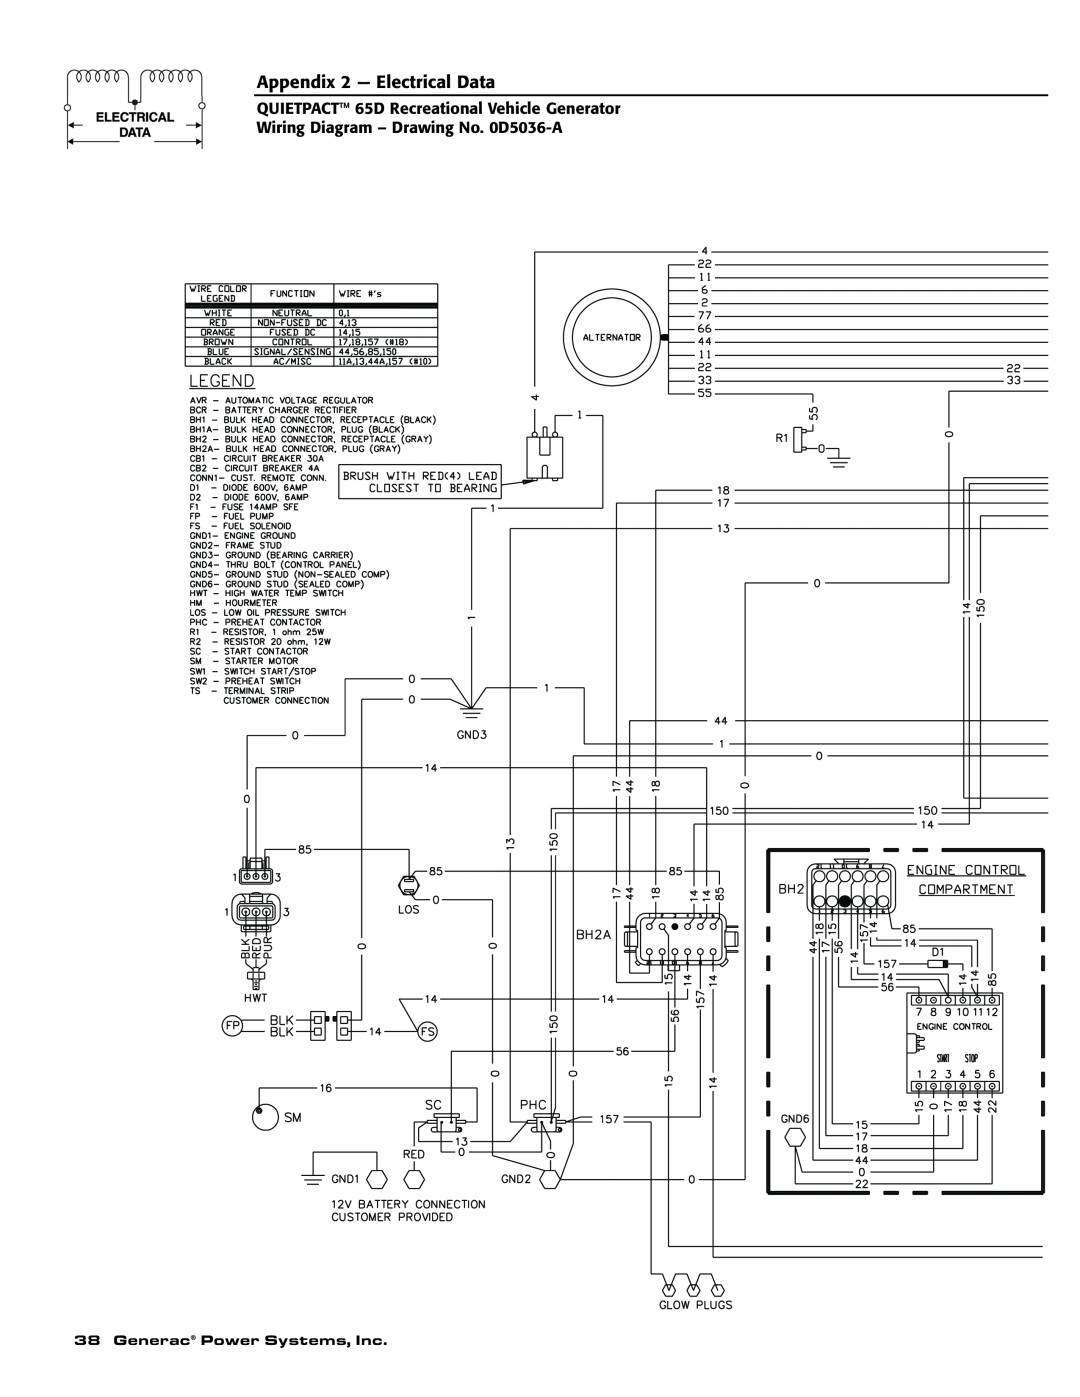 Generac 004614-1 owner manual Appendix 2 - Electrical Data, Generac Power Systems, Inc 